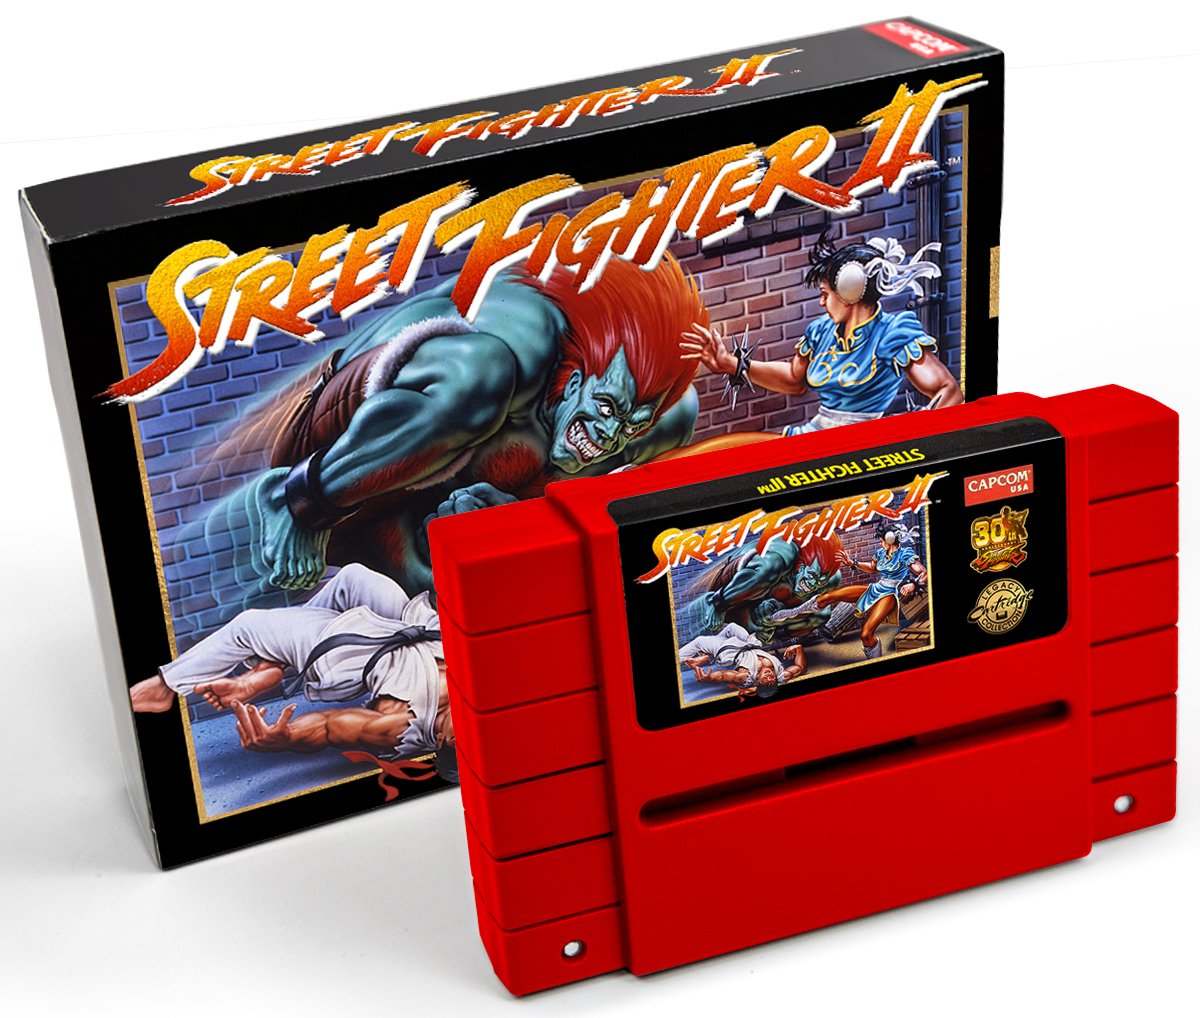 iam8bit-Street Fighter-SNES-01